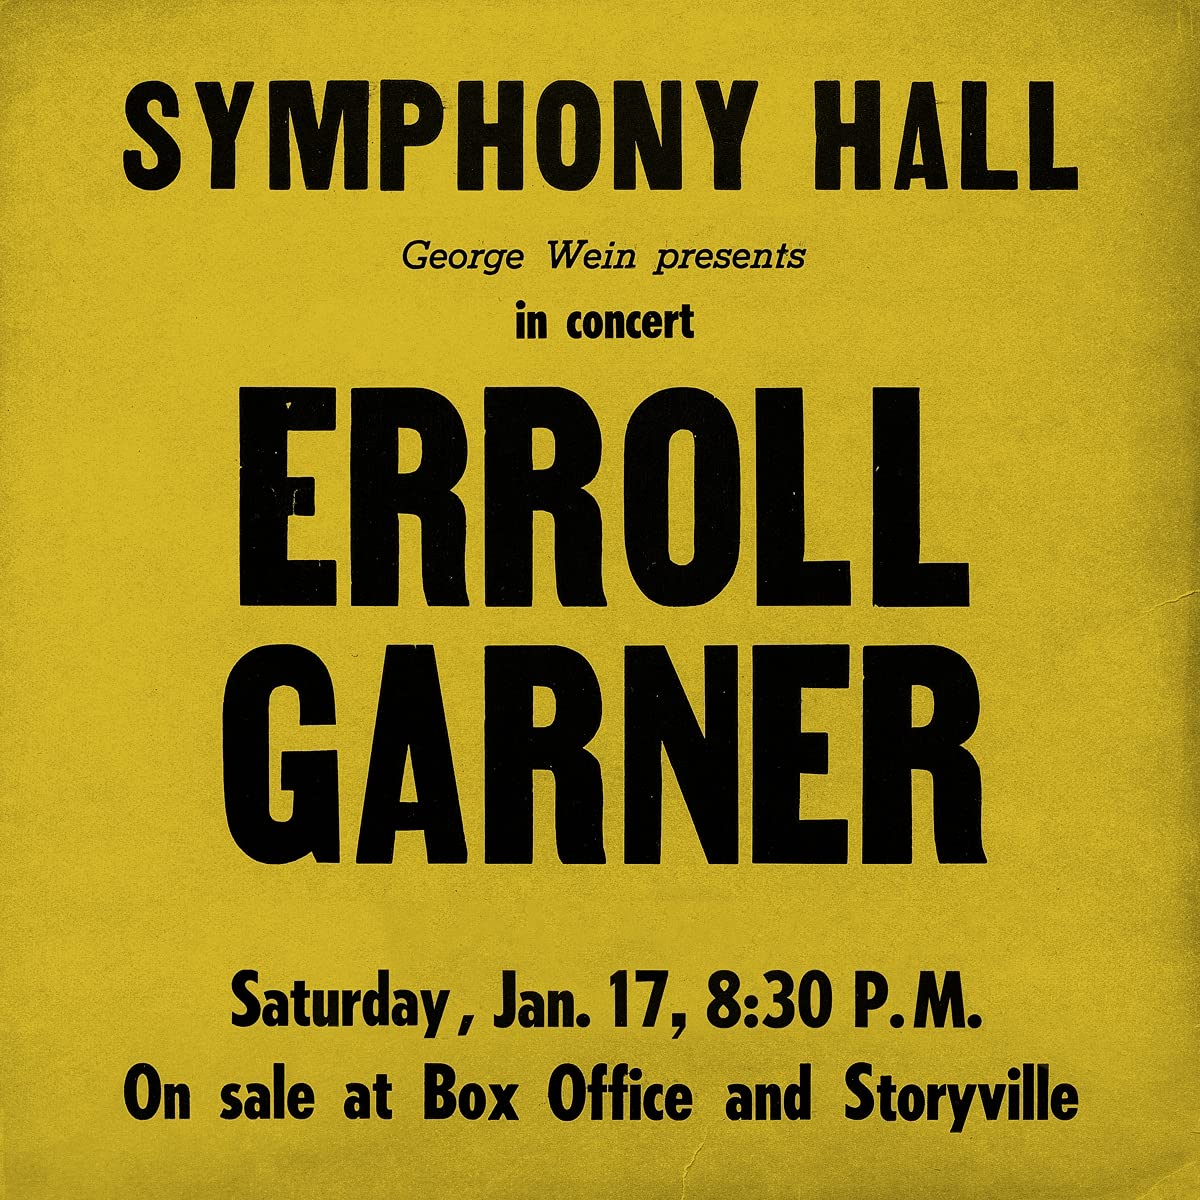 Symphony Hall Concert - Erroll Garner